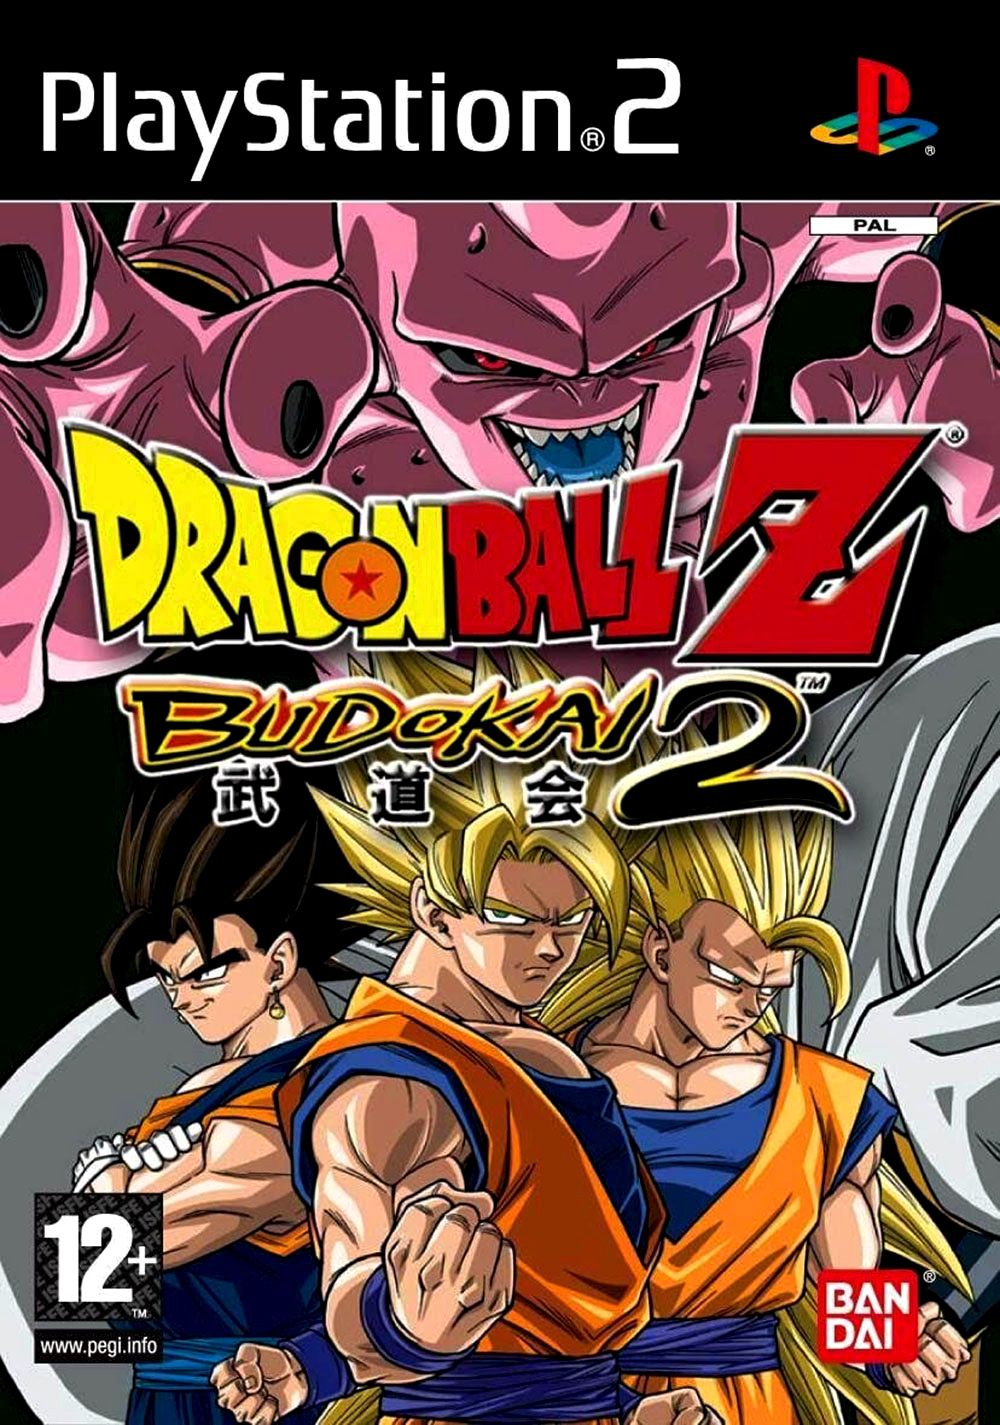 DragonBall Z: Budokai 2 (PS2) | PlayStation 2